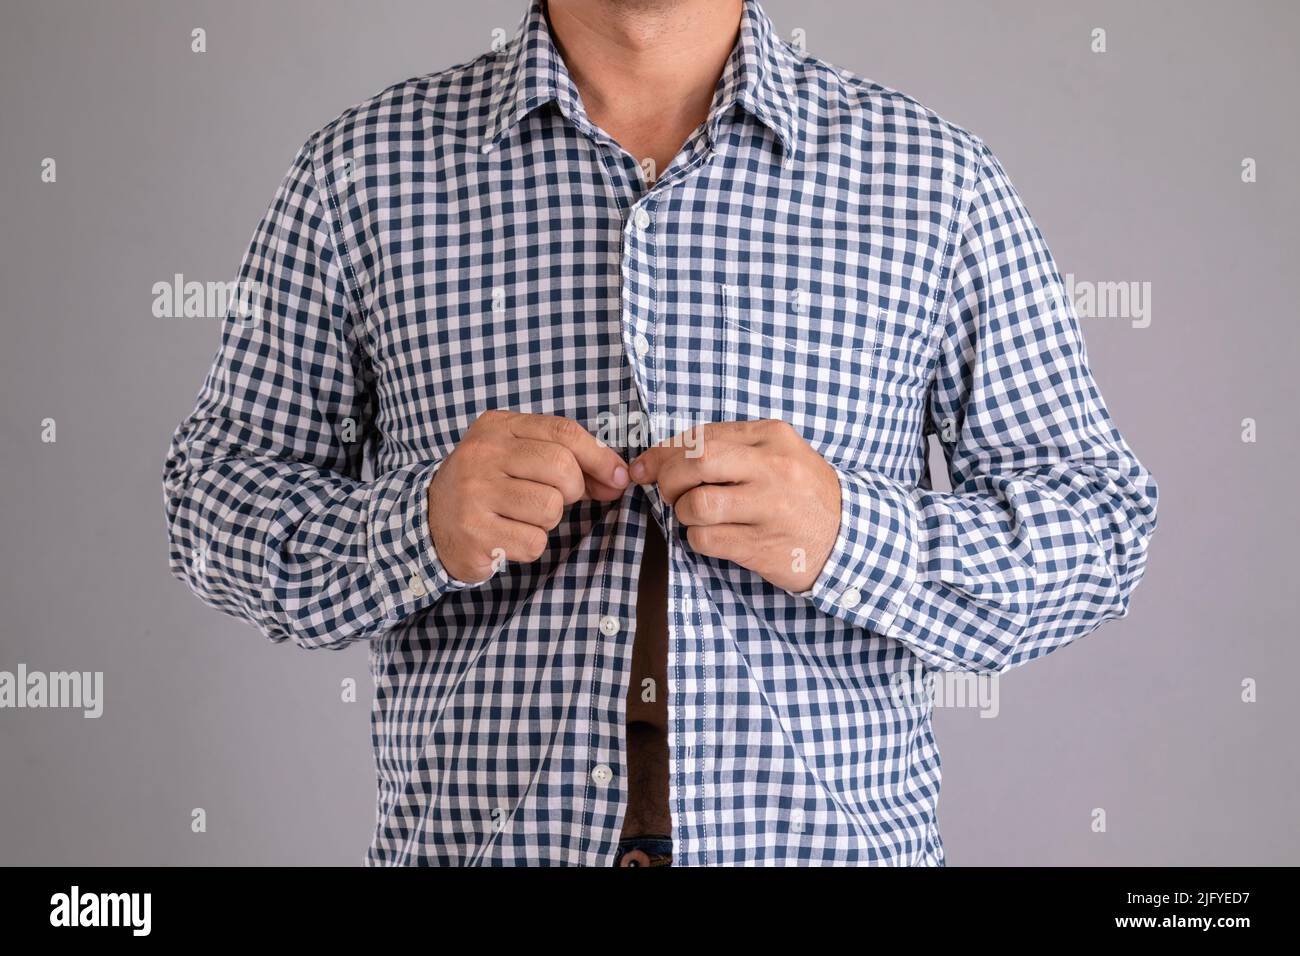 Close up man buttoning shirt studio shot on grey background Stock Photo